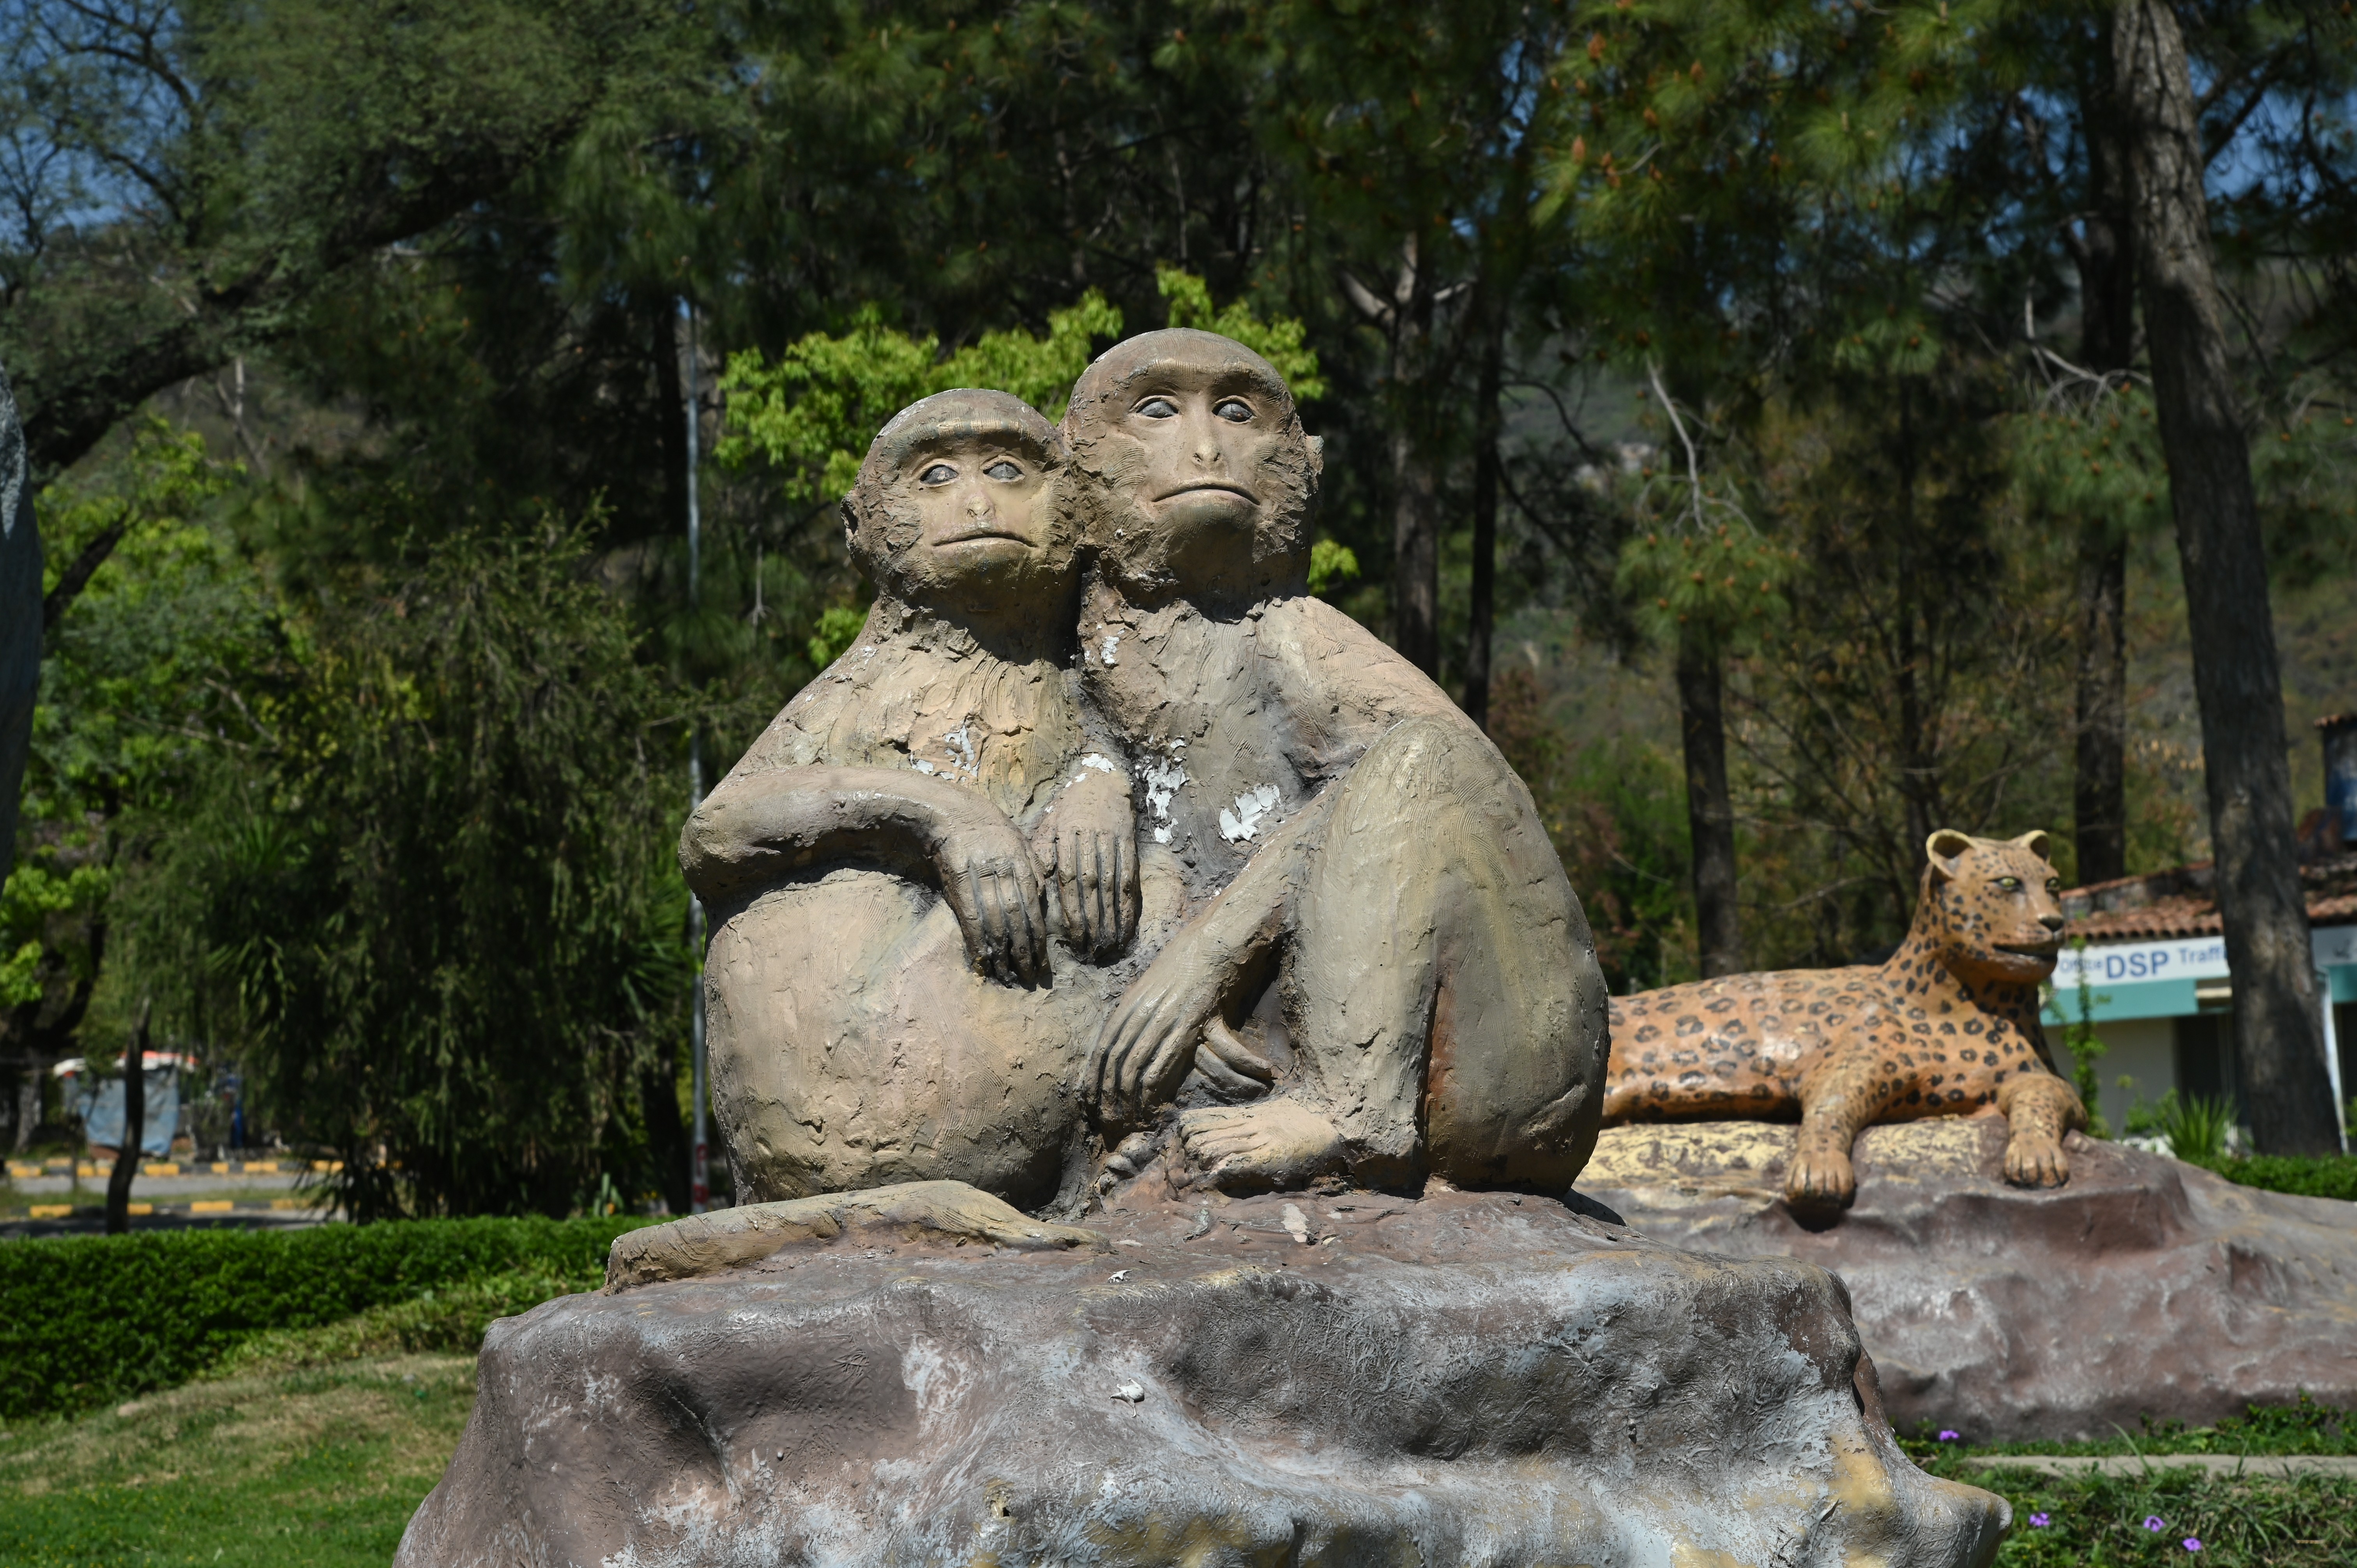 The 3D statues of monkeys